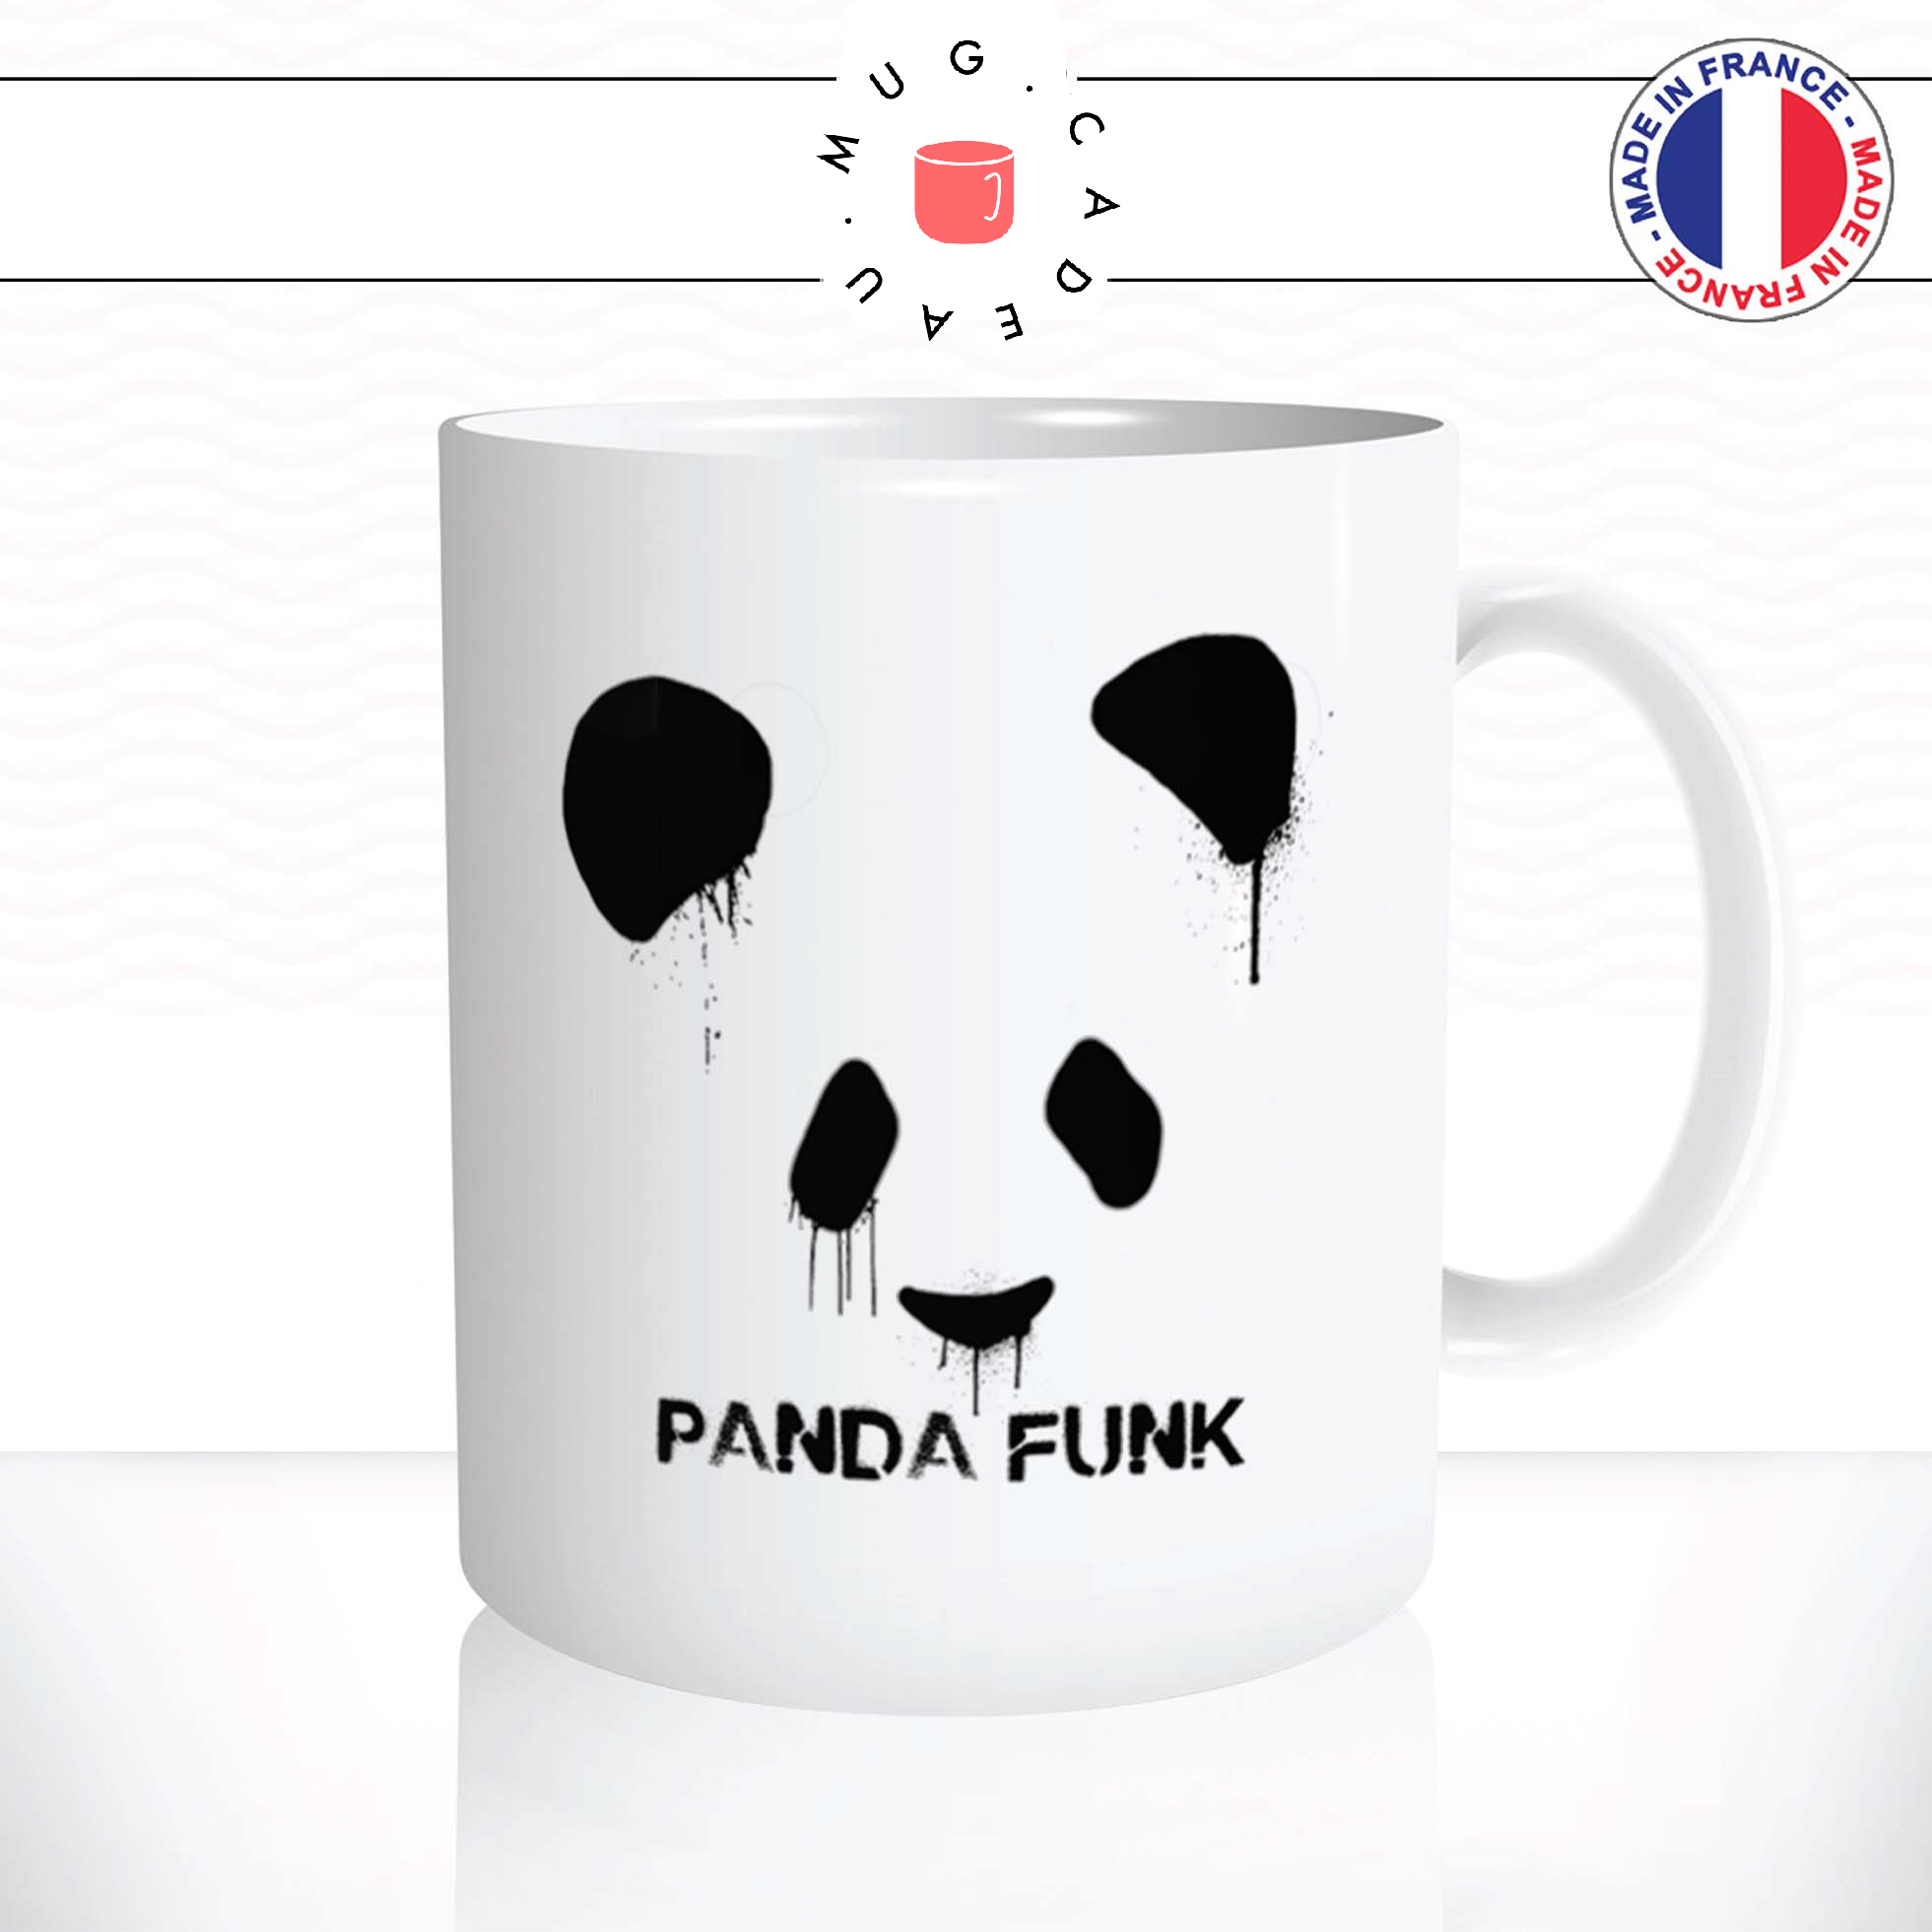 mug-tasse-ref21-panda-tete-logo-funk-tag-cafe-the-mugs-tasses-personnalise-anse-droite